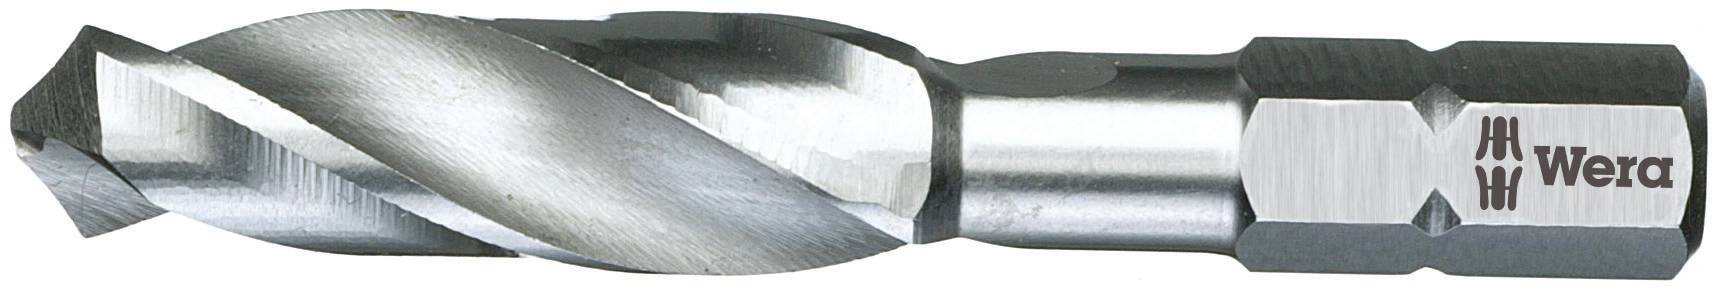 WERA HSS Metall-Spiralbohrer 3.1 mm 05104611001 Gesamtlänge 40 mm 1/4\" (6.3 mm) 1 St. (05104611001)